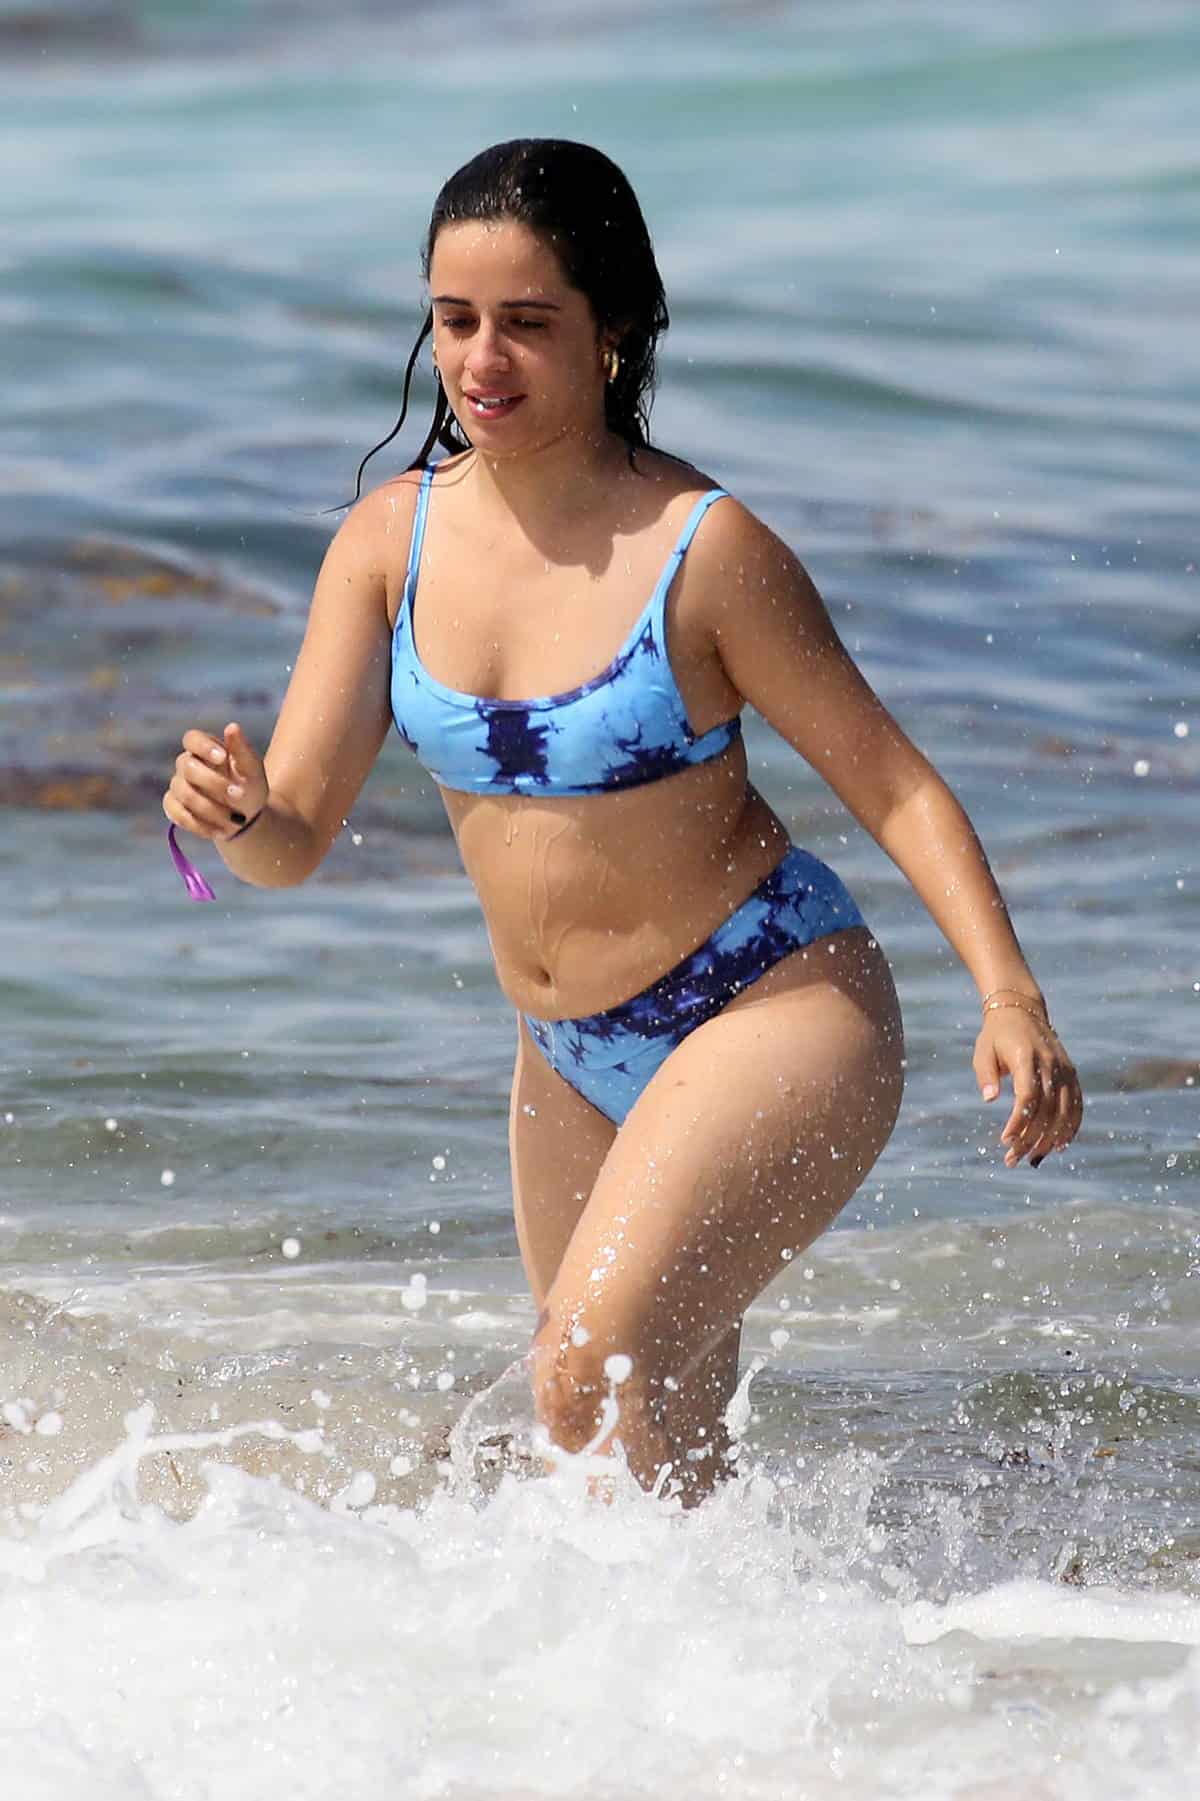 Camila Cabello Looks Incredible in a Thong Bikini at the Beach in Miami